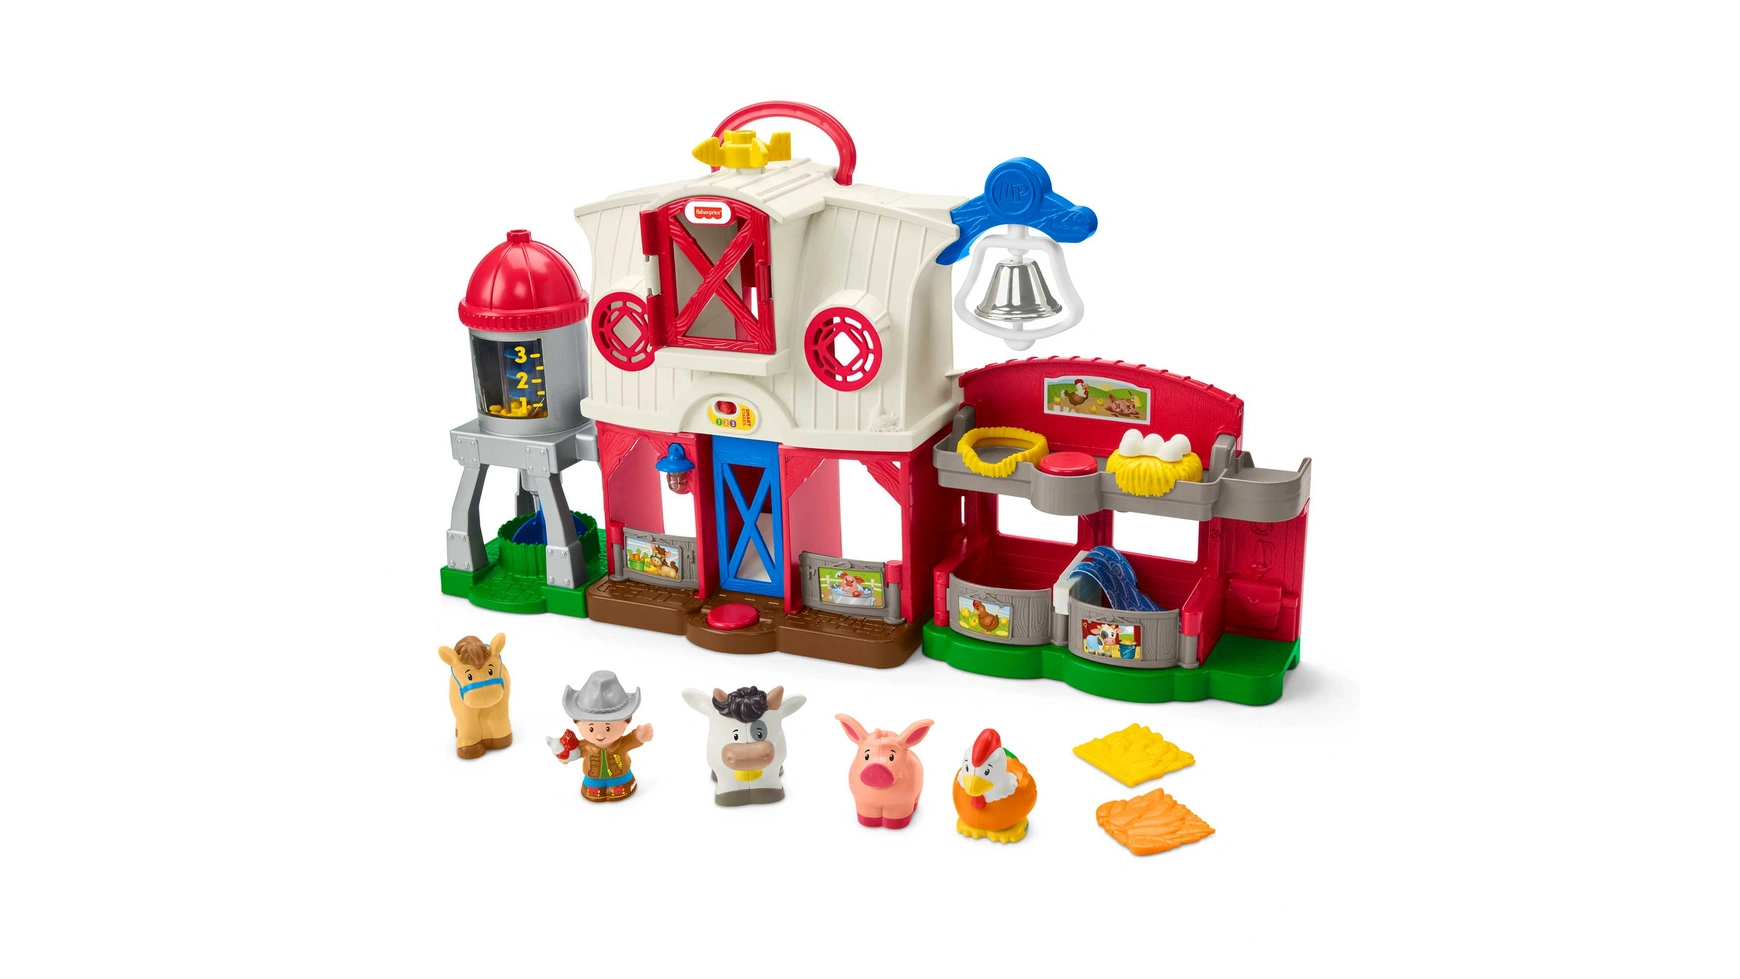 Ферма Fisher Price Little People, включая фигурки и игрушки для малышей